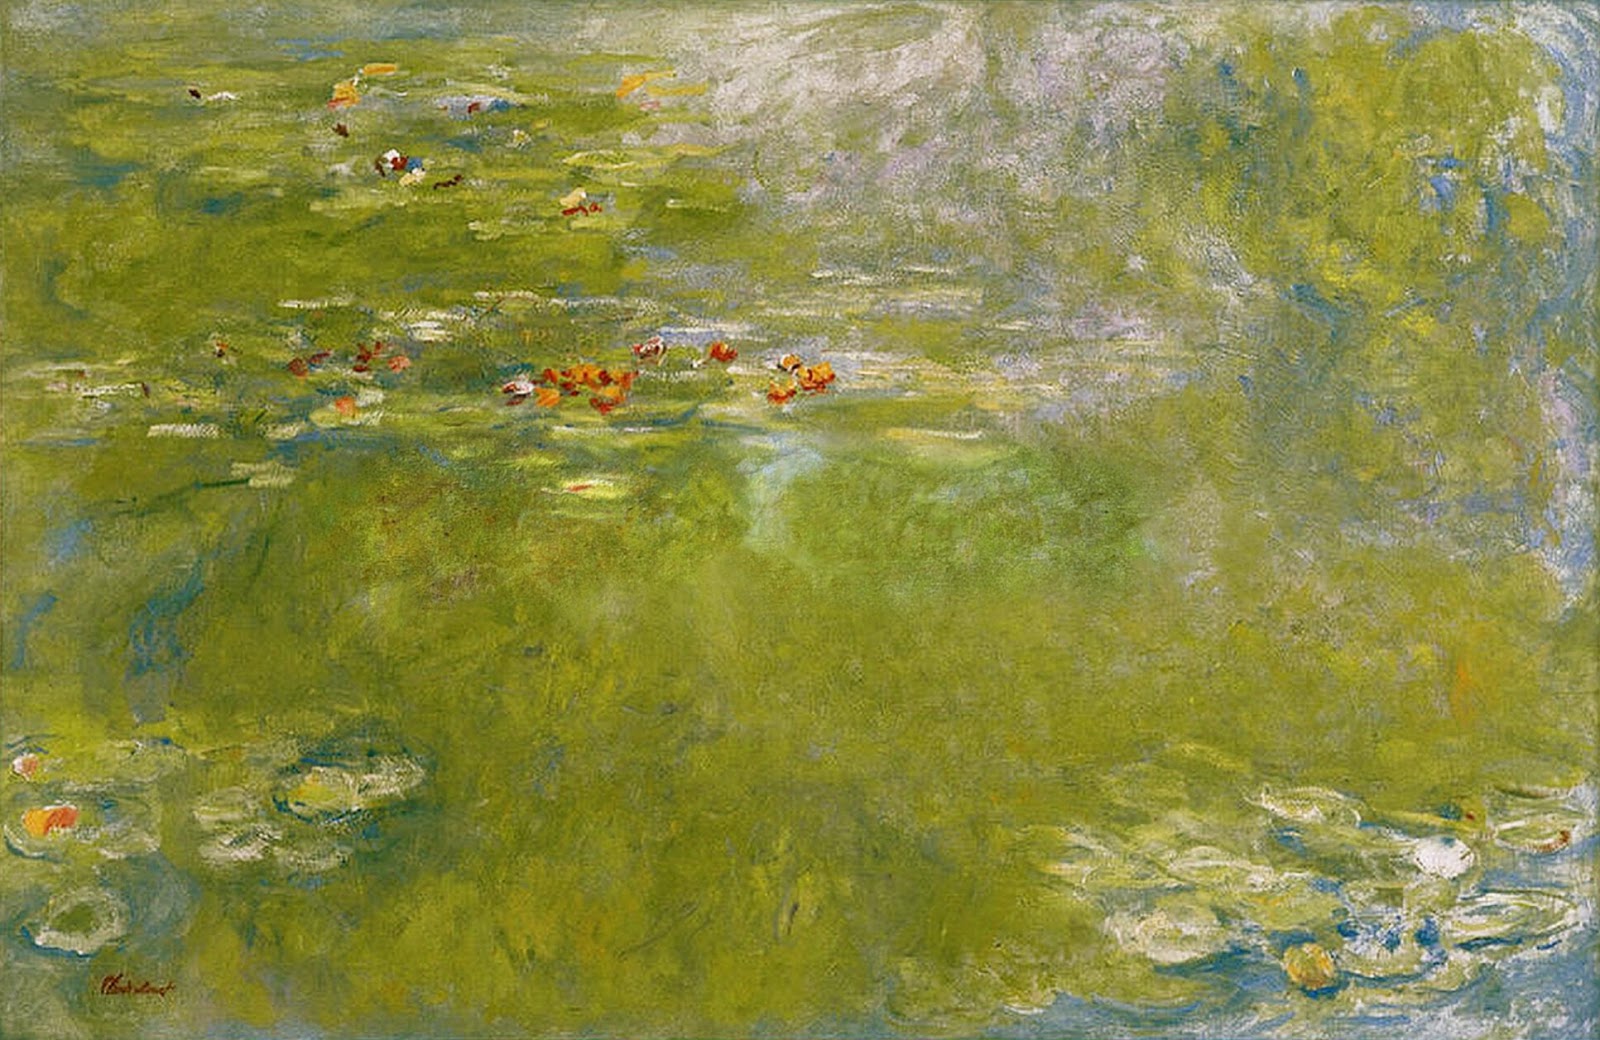 Claude+Monet-1840-1926 (408).jpg